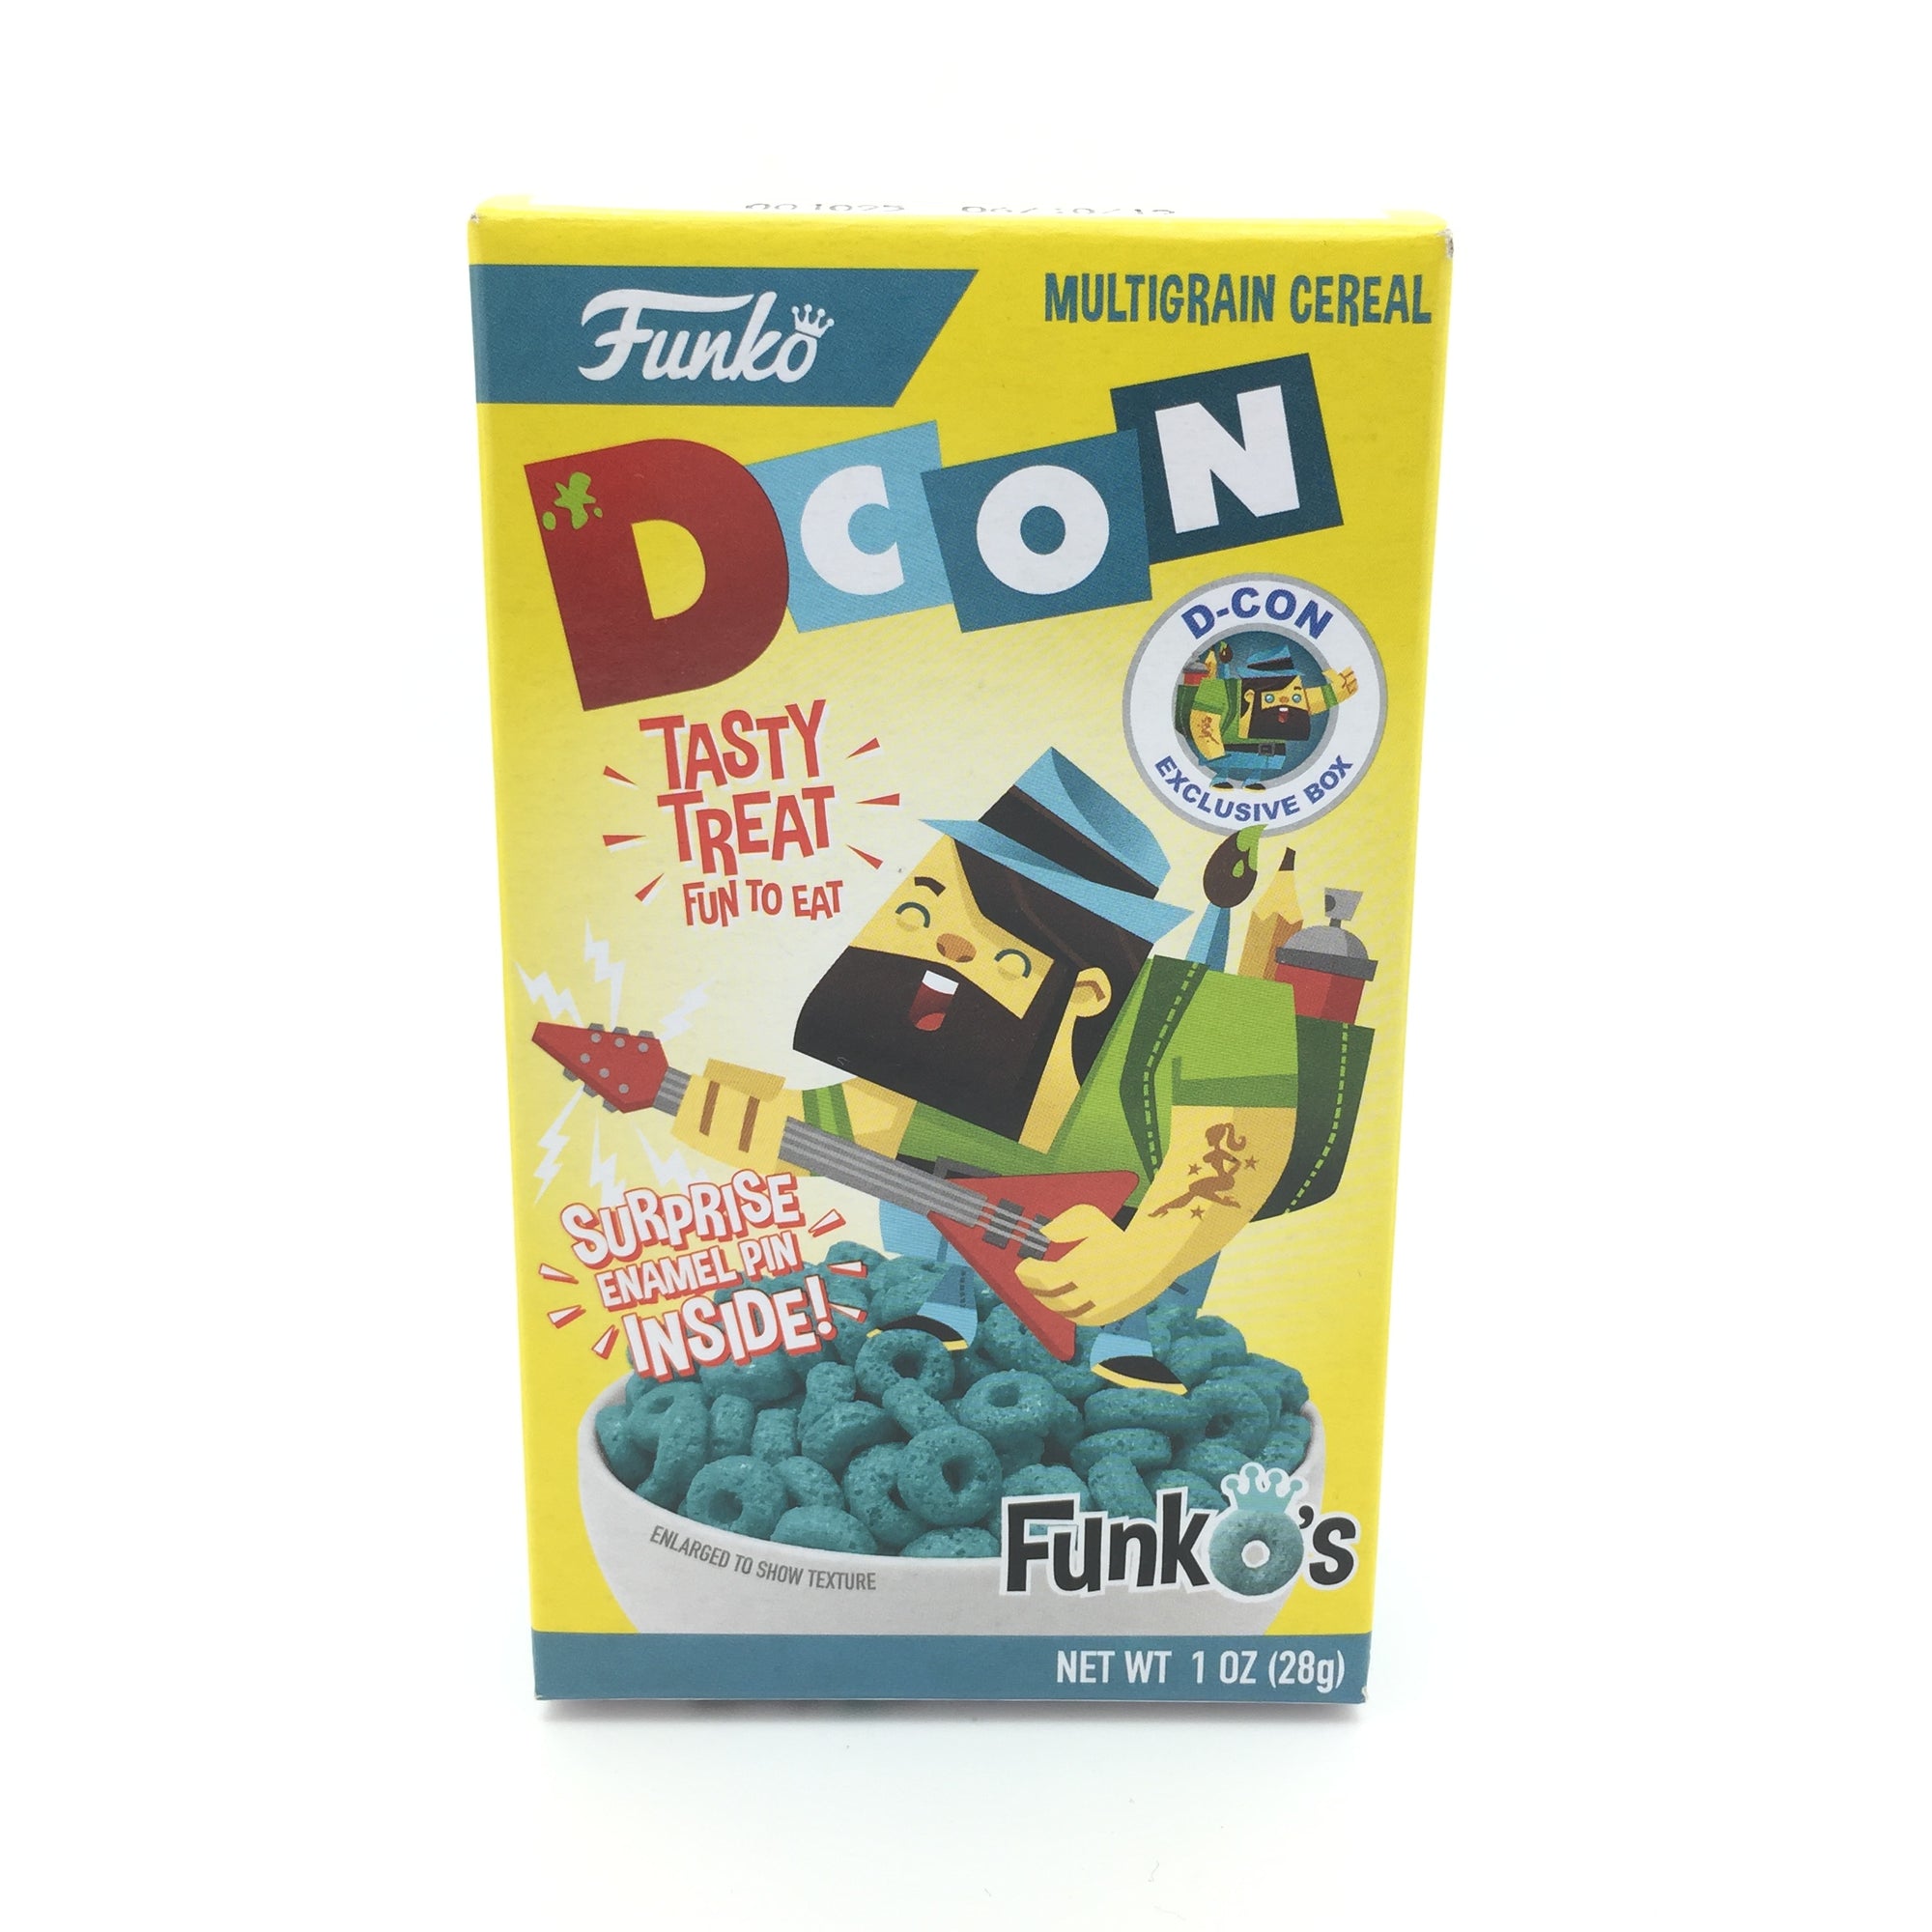 Designer Con FunkO's Exclusive Small Cereal Box with Surprise Enamel Pin